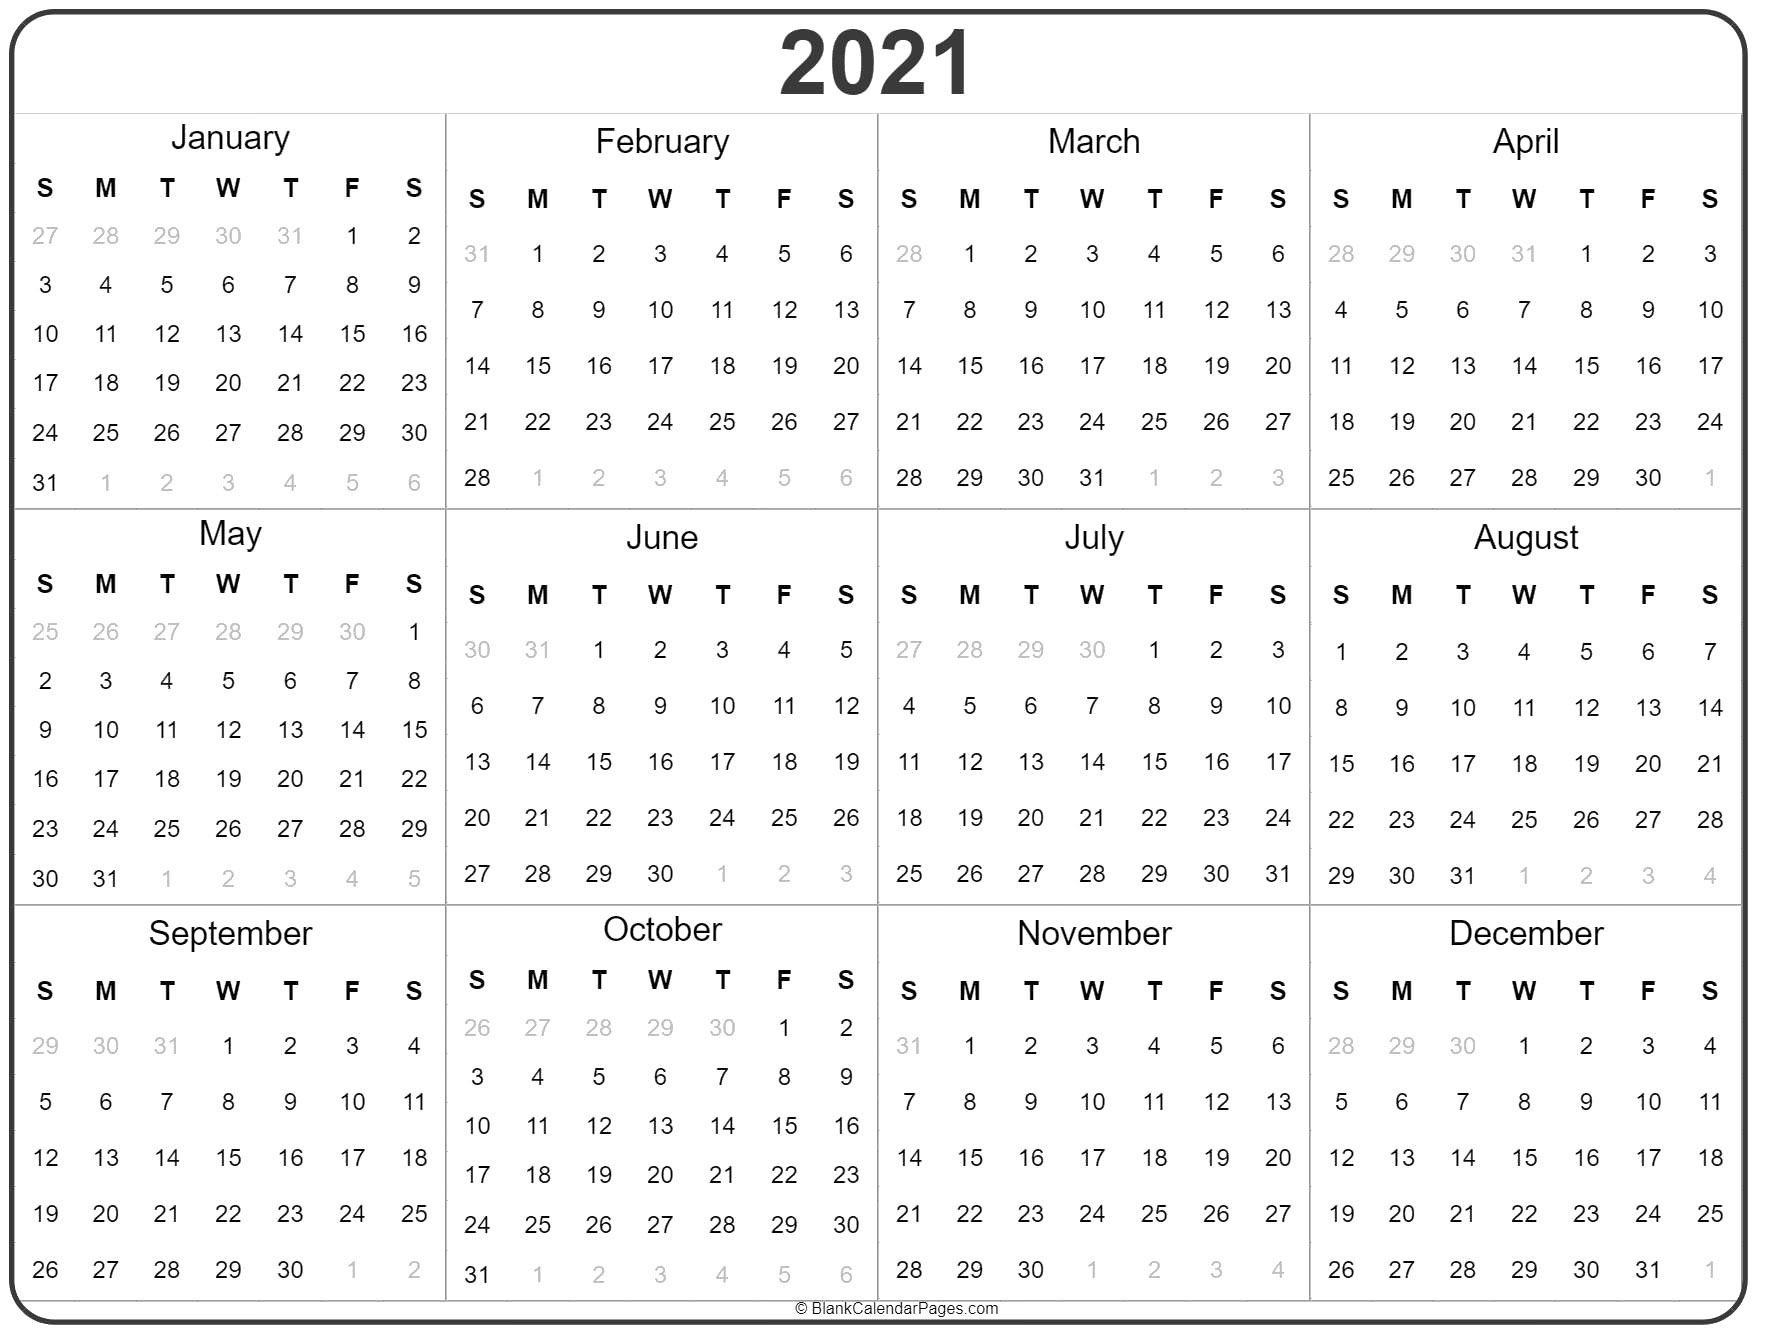 Wallpaper for calendar 2021